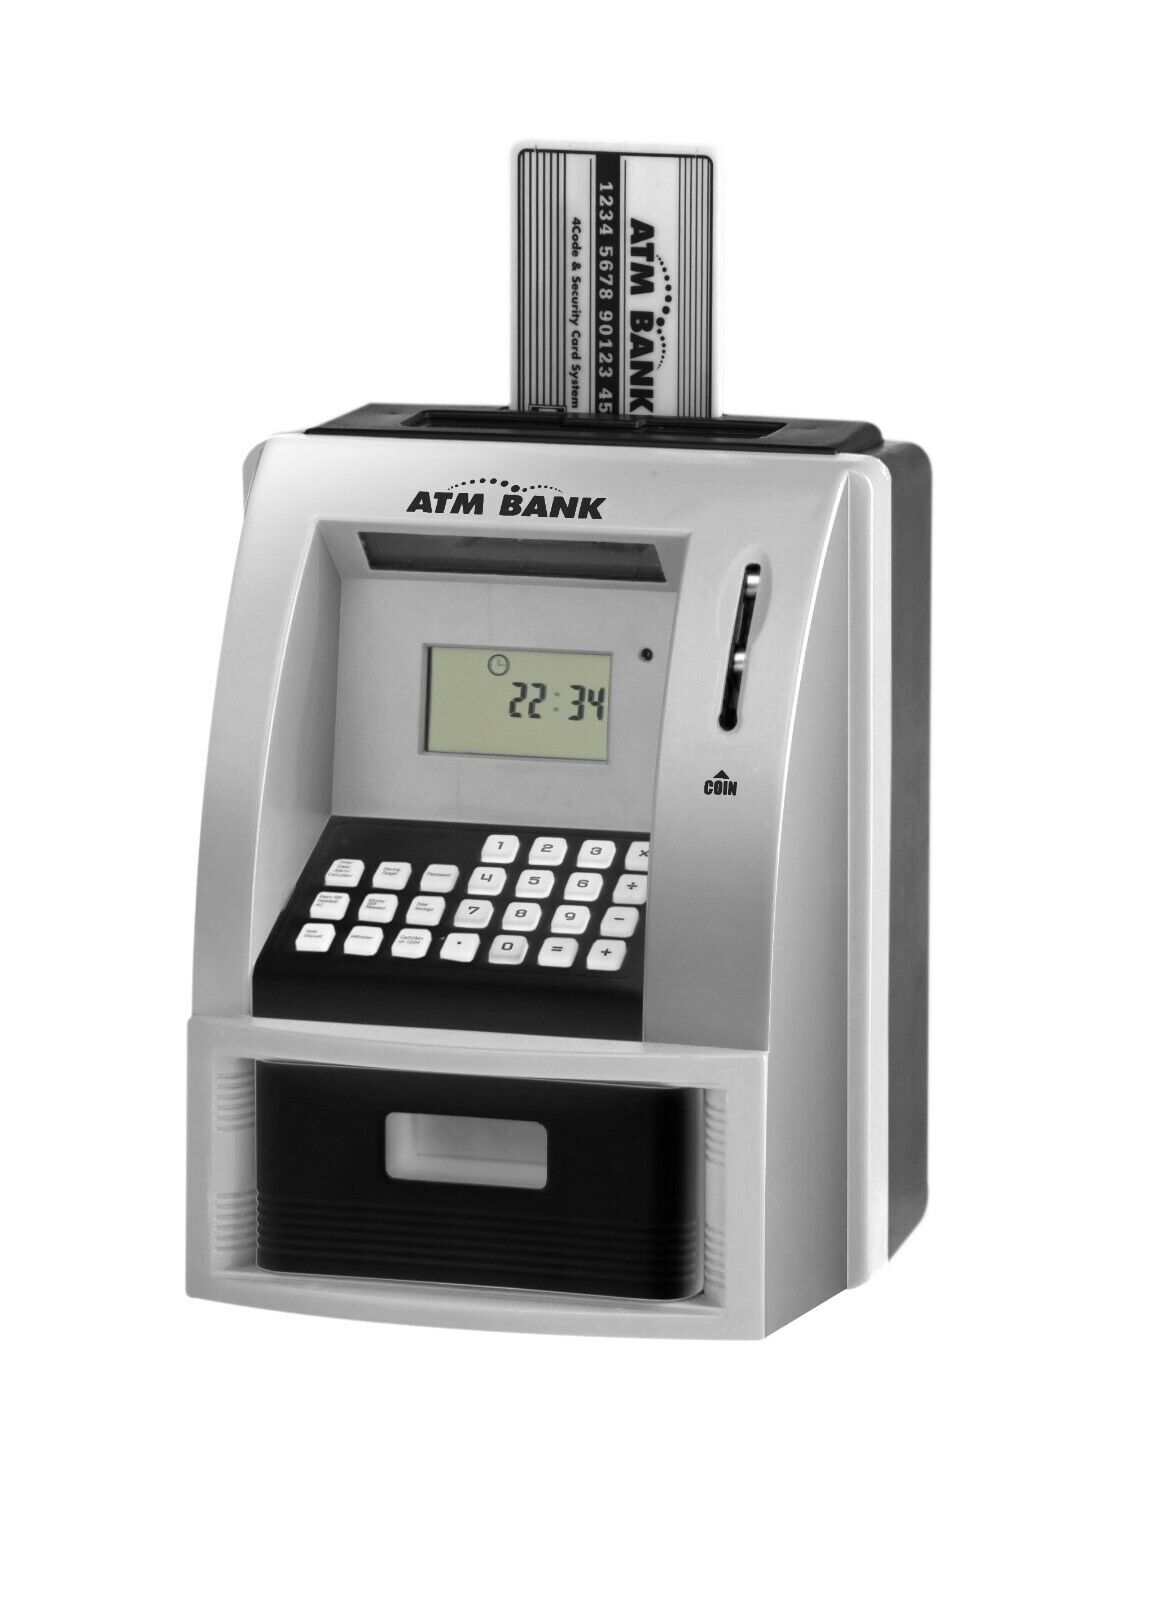 Toy Talking ATM Bank ATM Machine Savings Bank for Kids